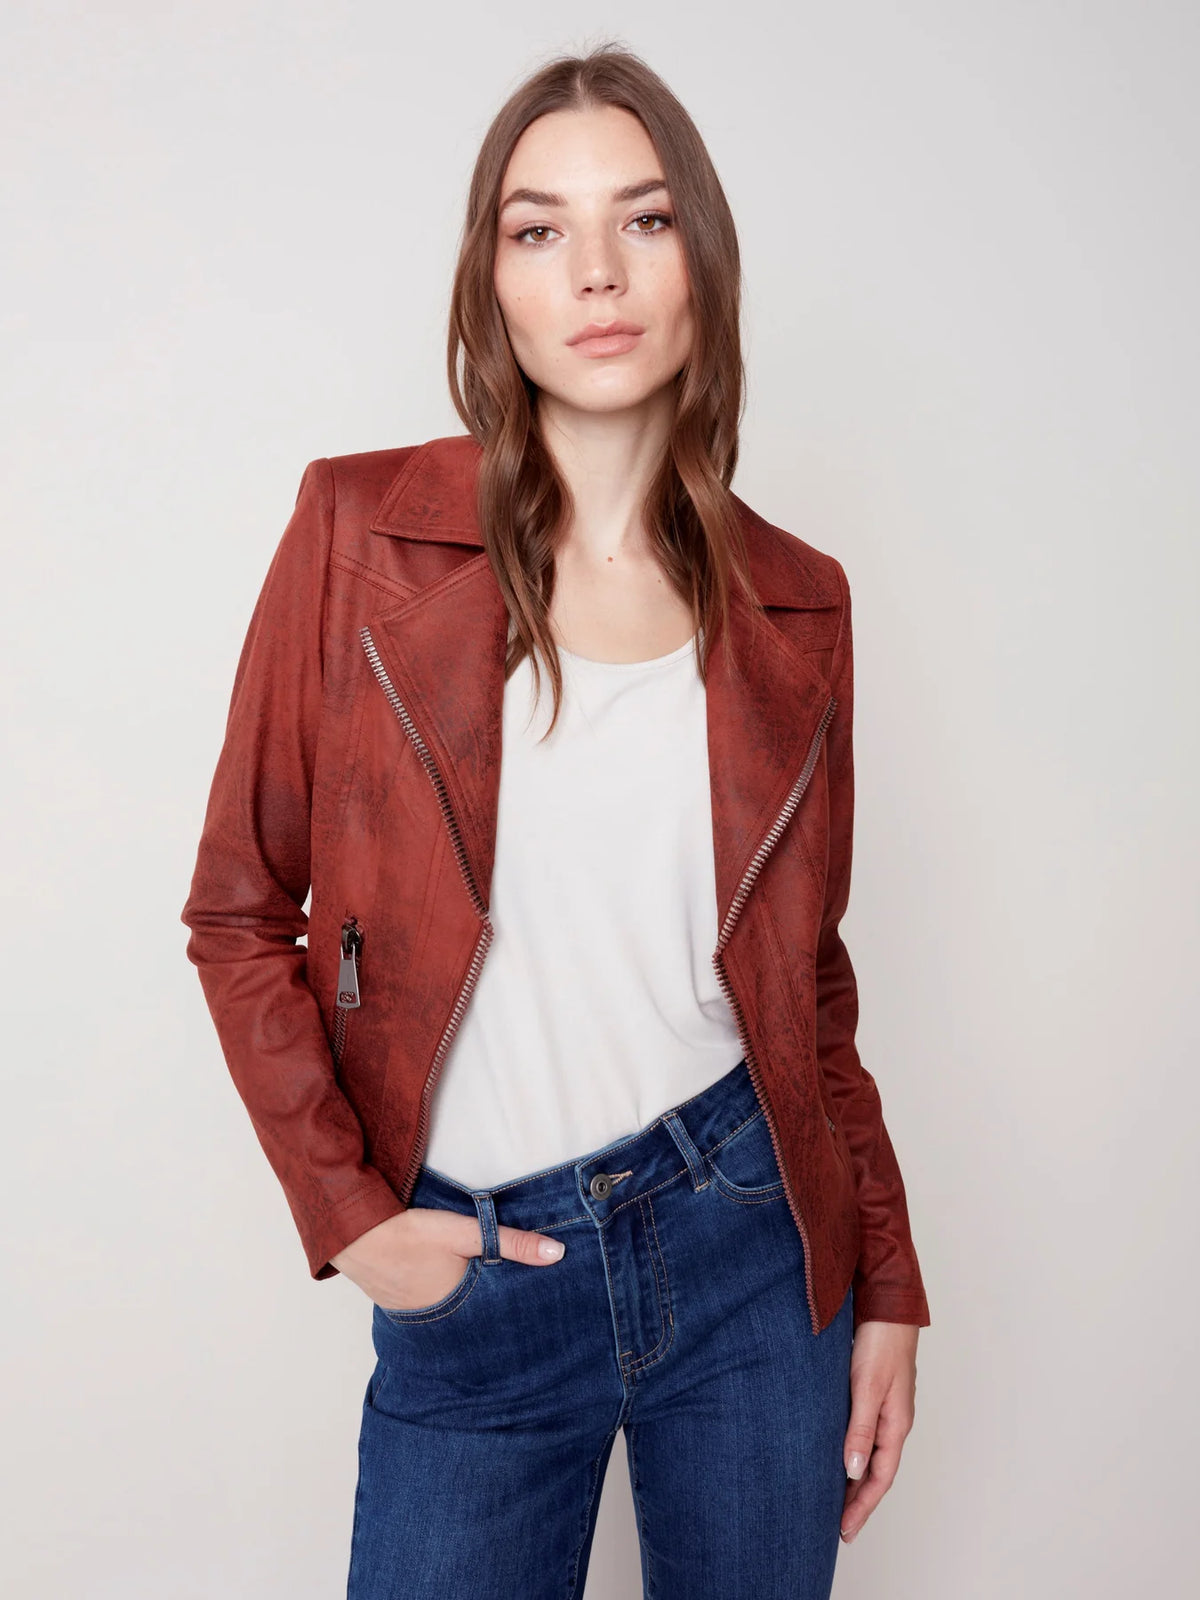 Vintage Faux Leather Jacket